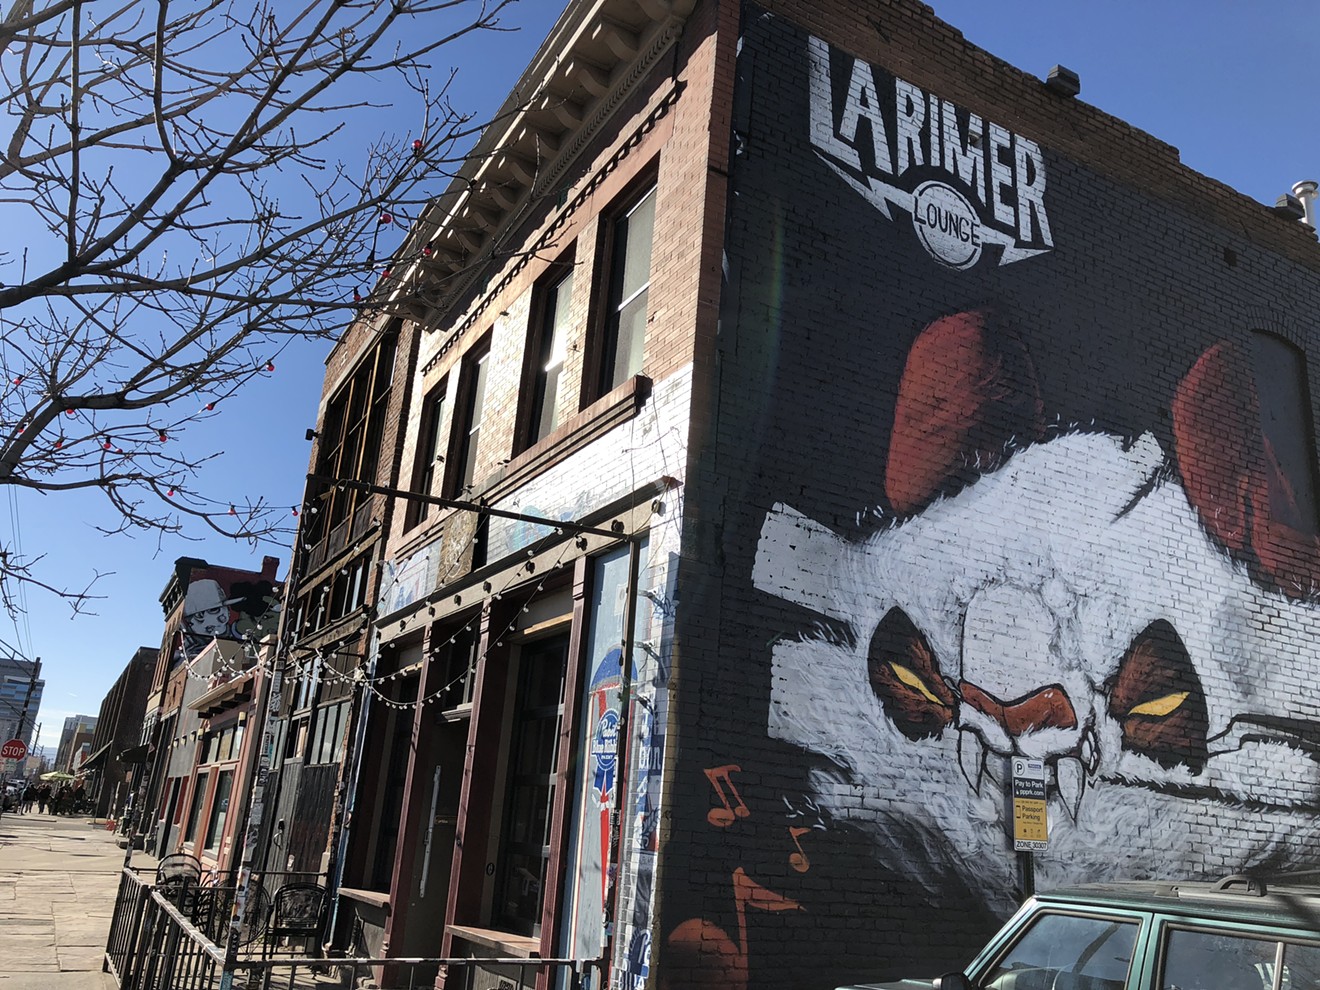 Larimer Lounge opened fifteen years ago.